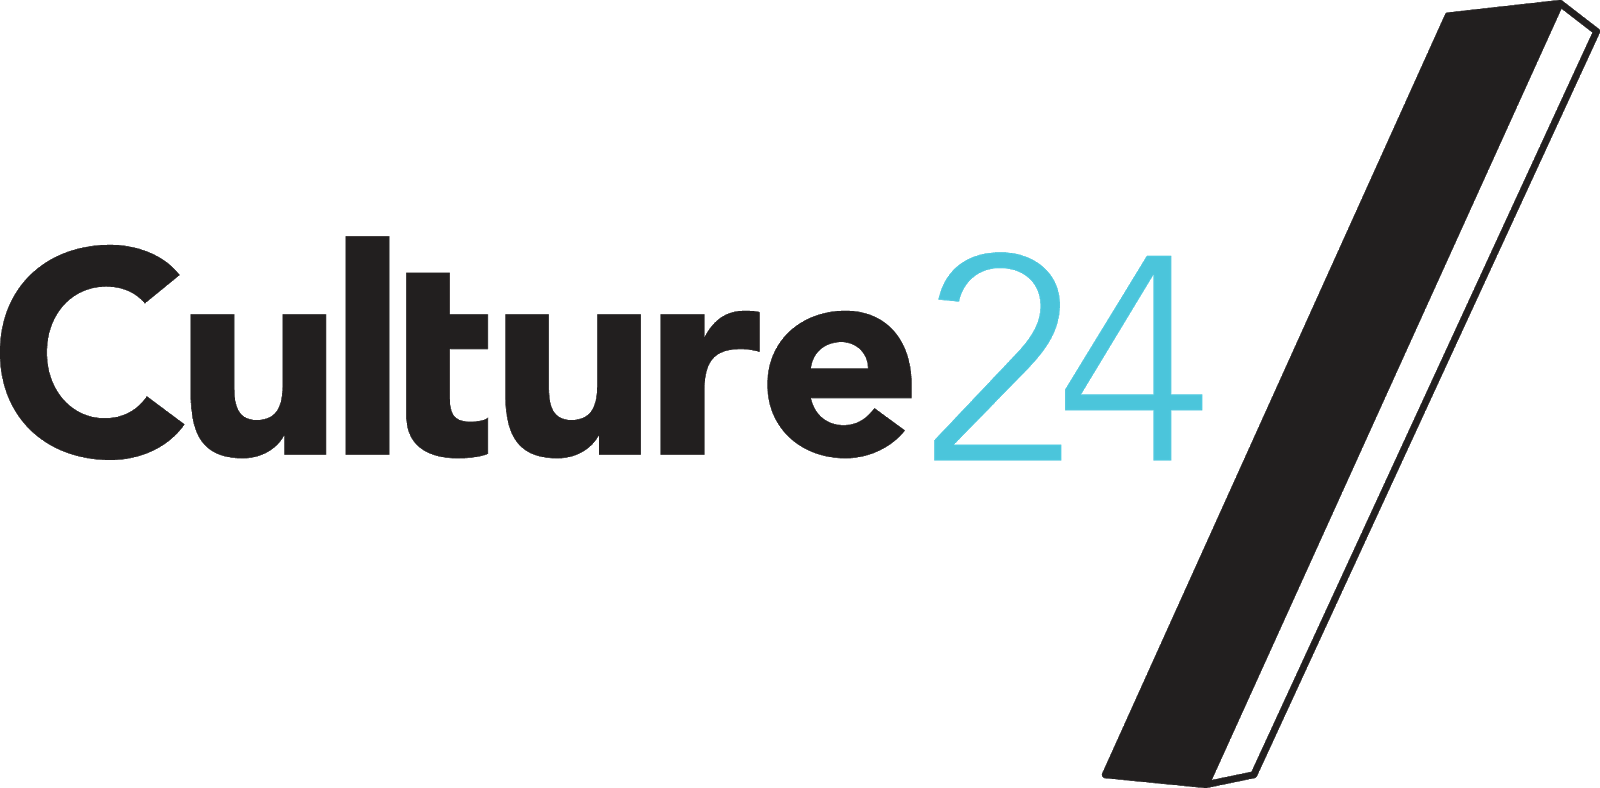 Culture24 logo